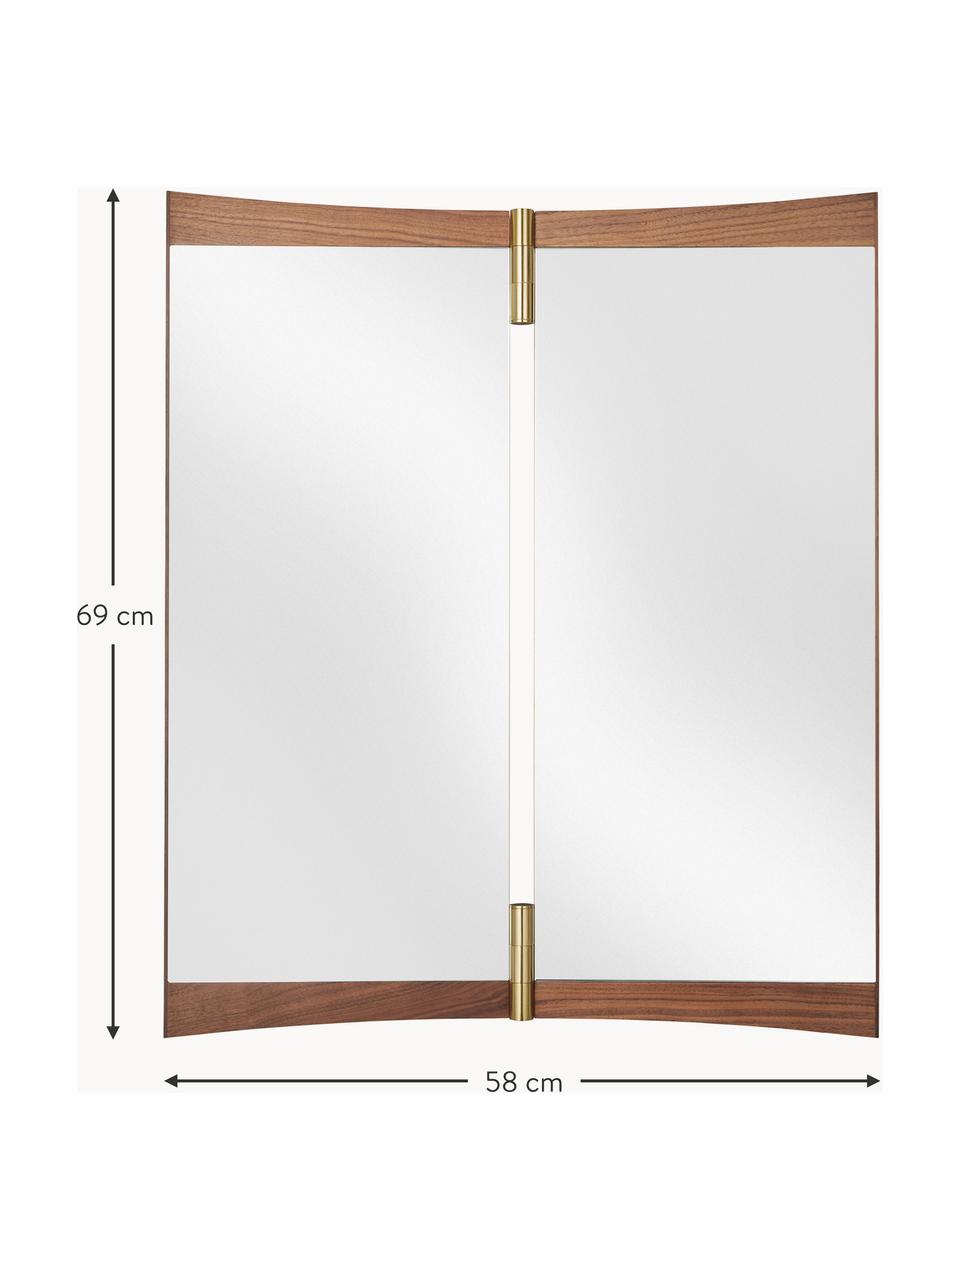 Verstellbarer Wandspiegel Vanity, Rahmen: Walnussholz, Dekor: Messing, Walnussholz, B 58 x H 69 cm